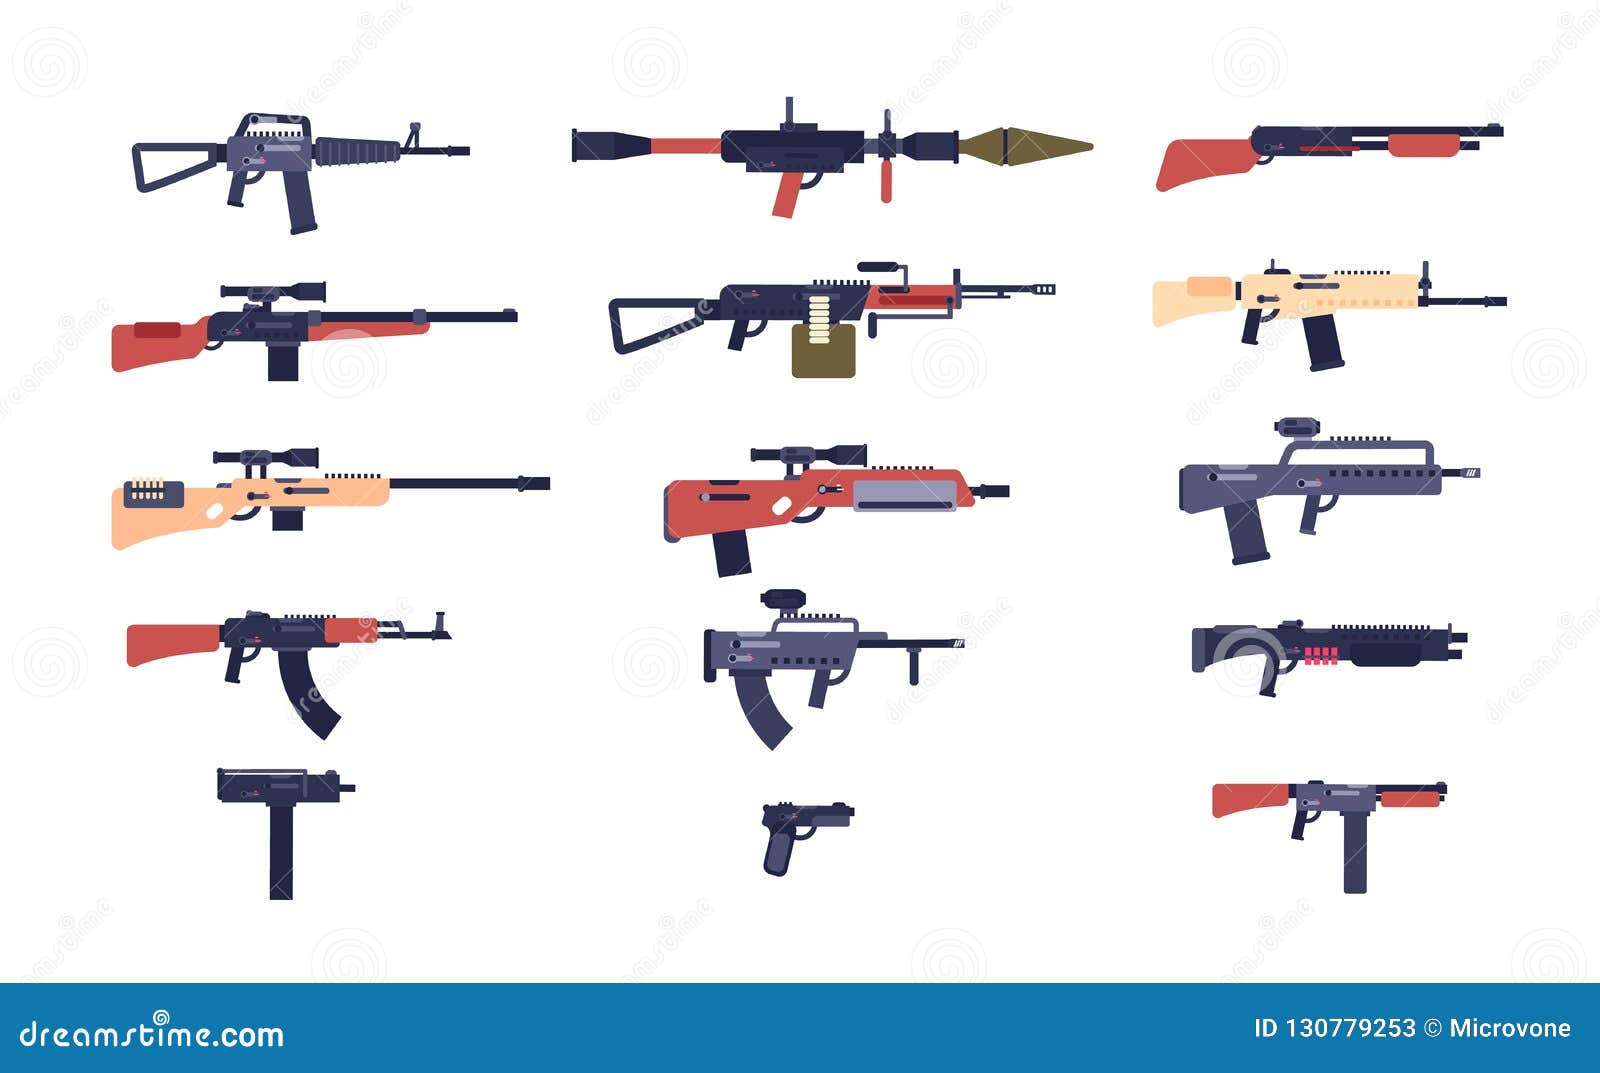 Automatic Guns. Battle Game Weapons. Pistol, Shotgun and Launcher